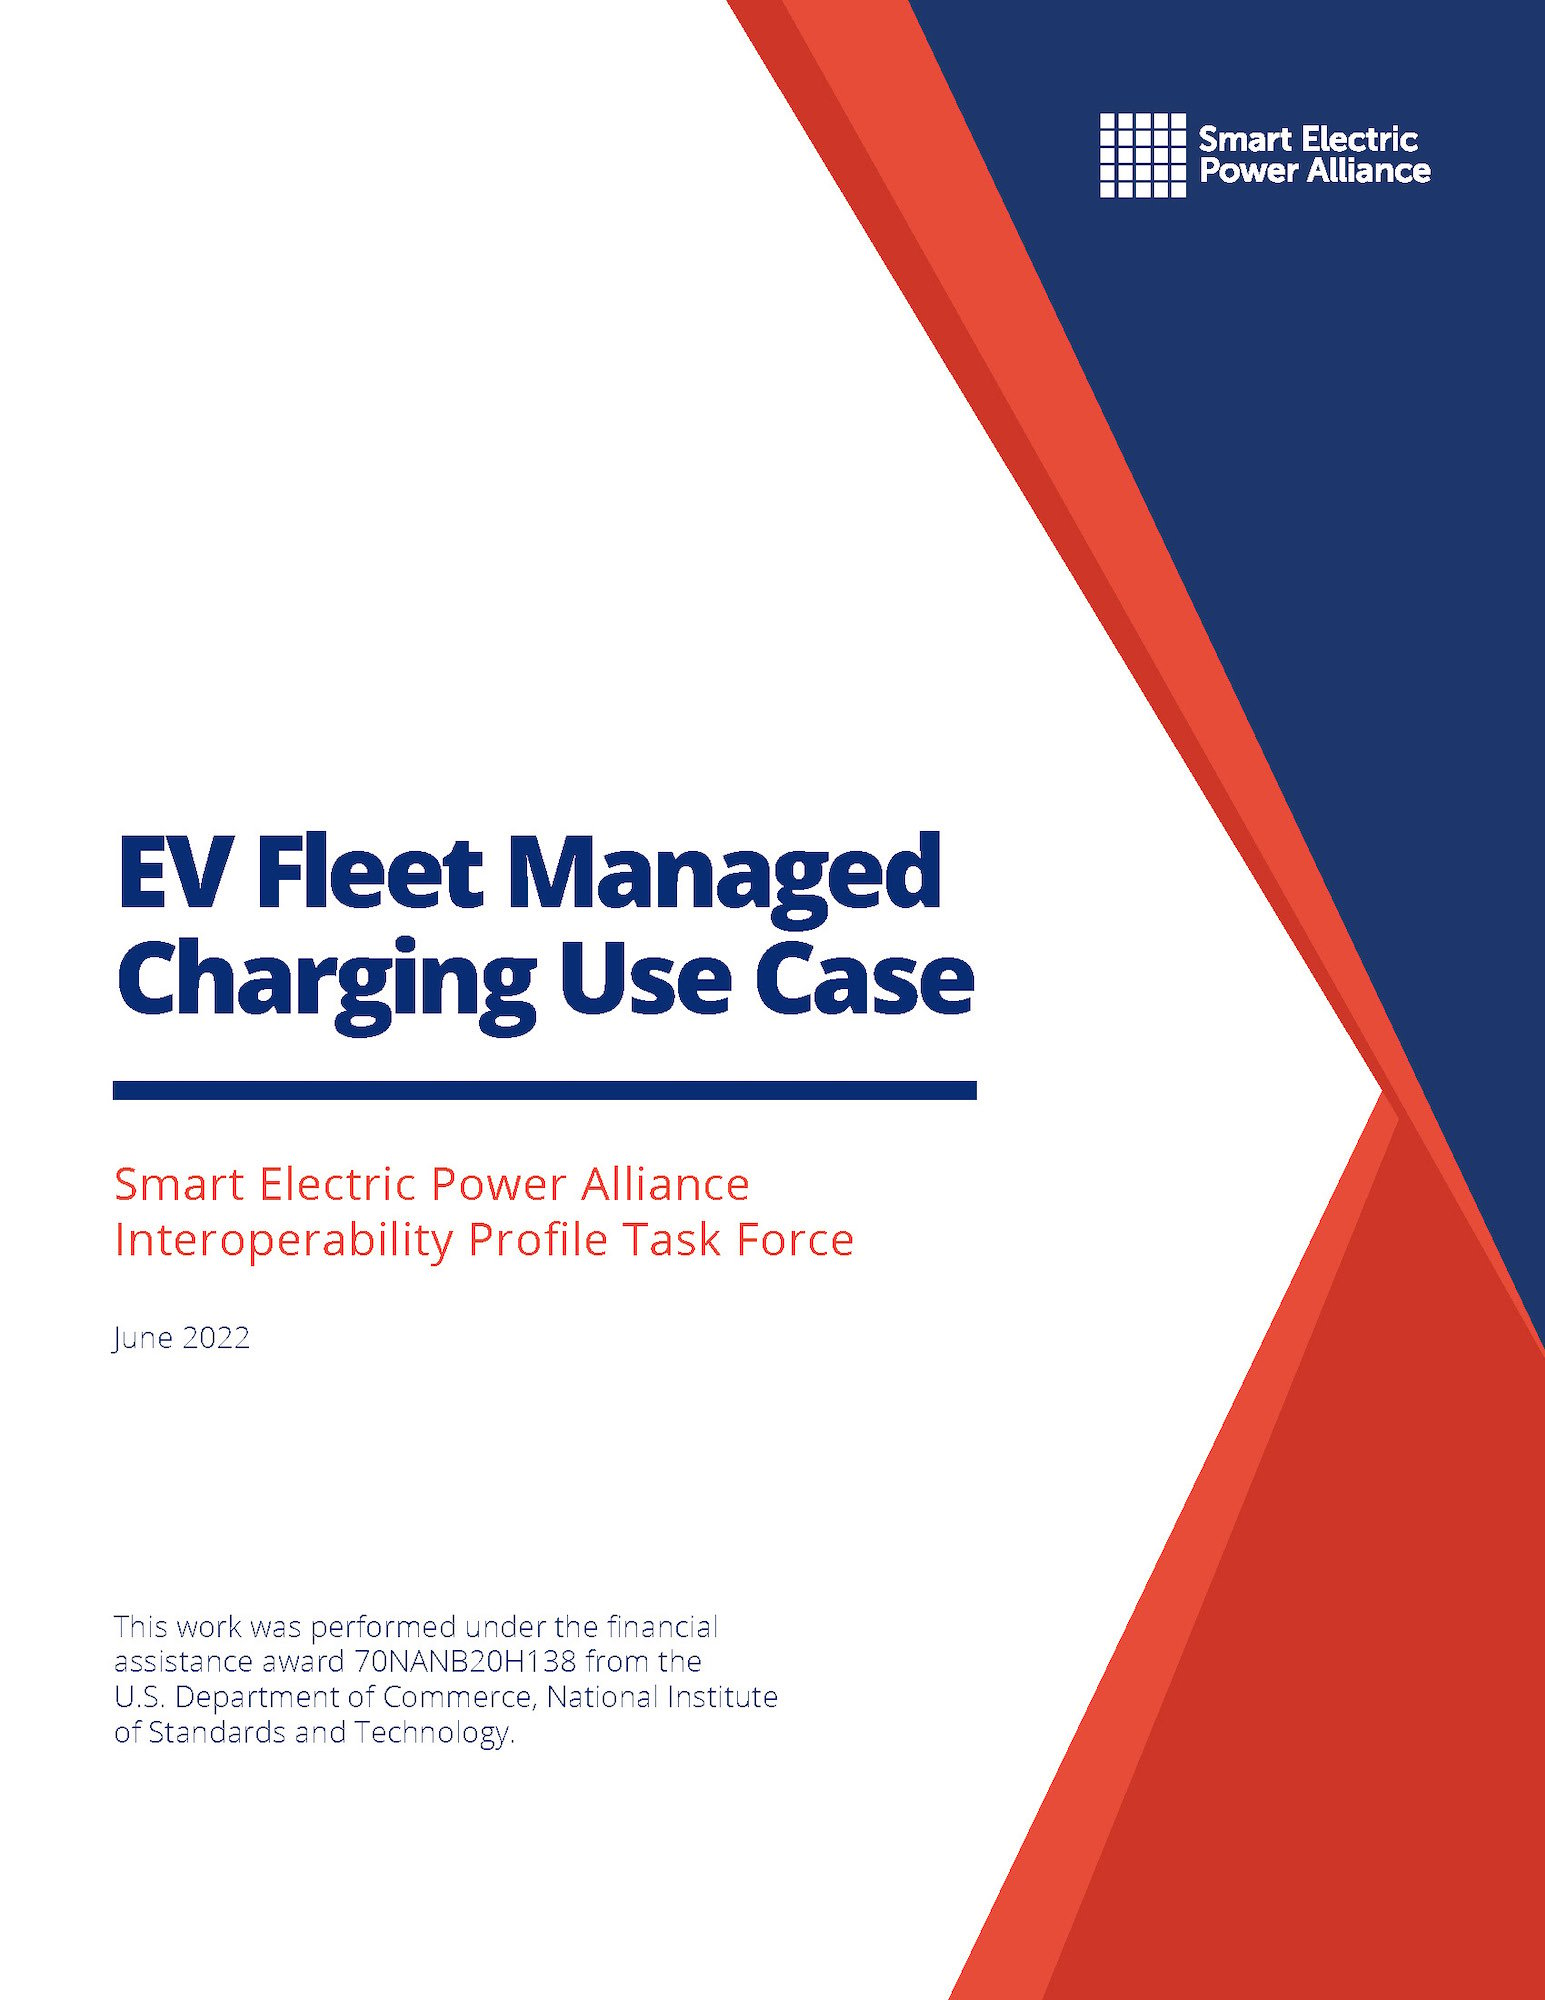 EV Fleet Managed Charging Use Case